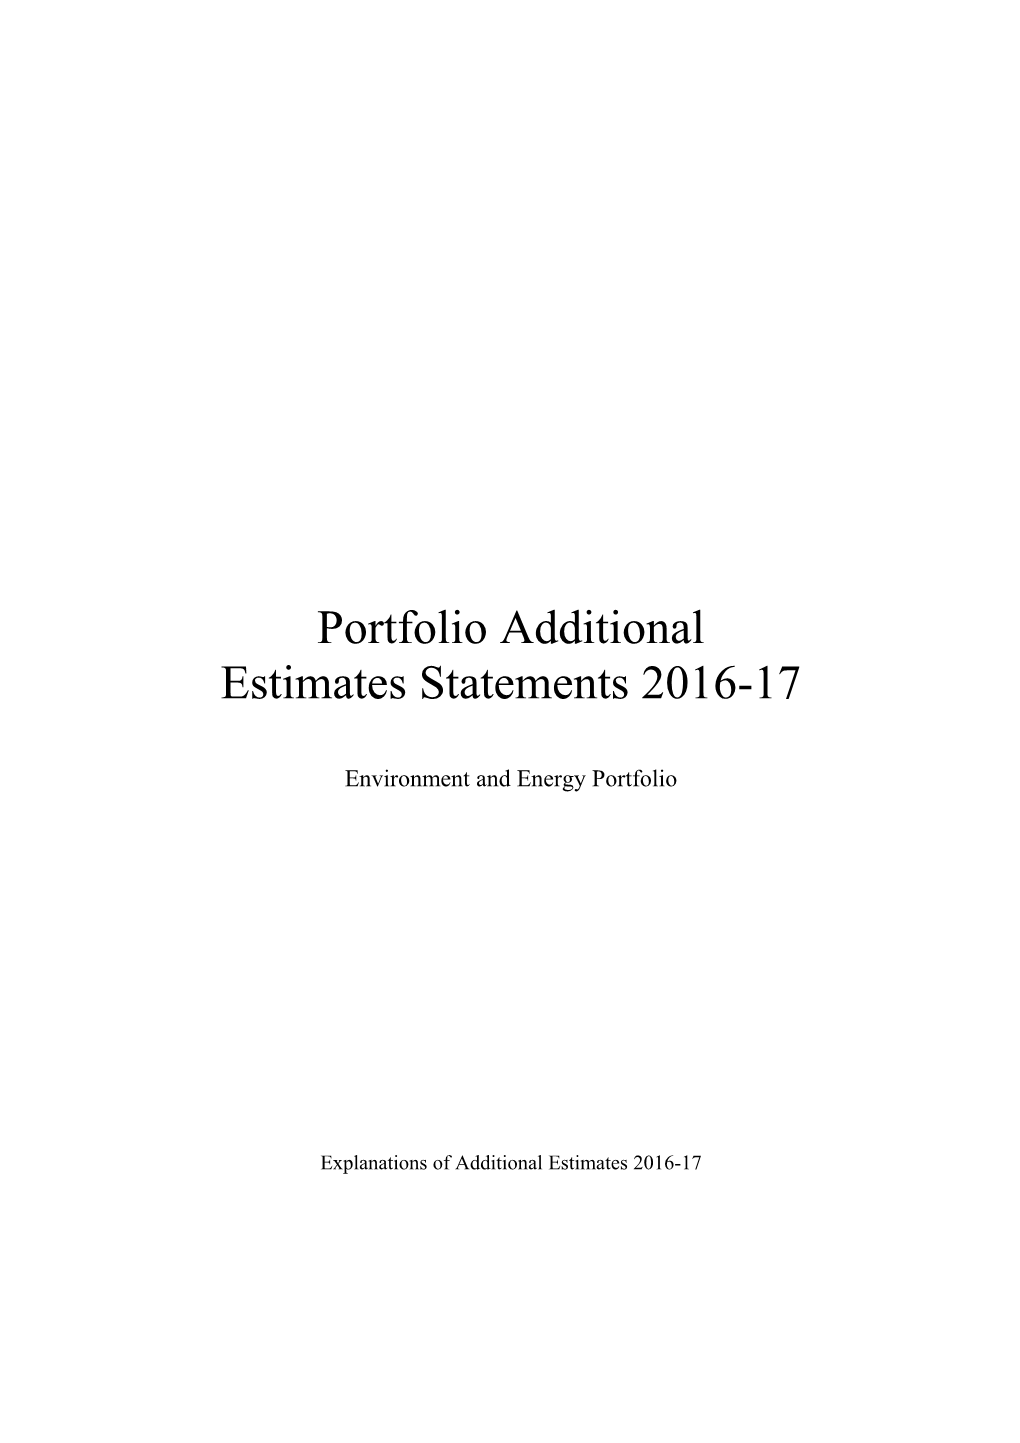 Portfolio Additional Estimates Statements 2016-17